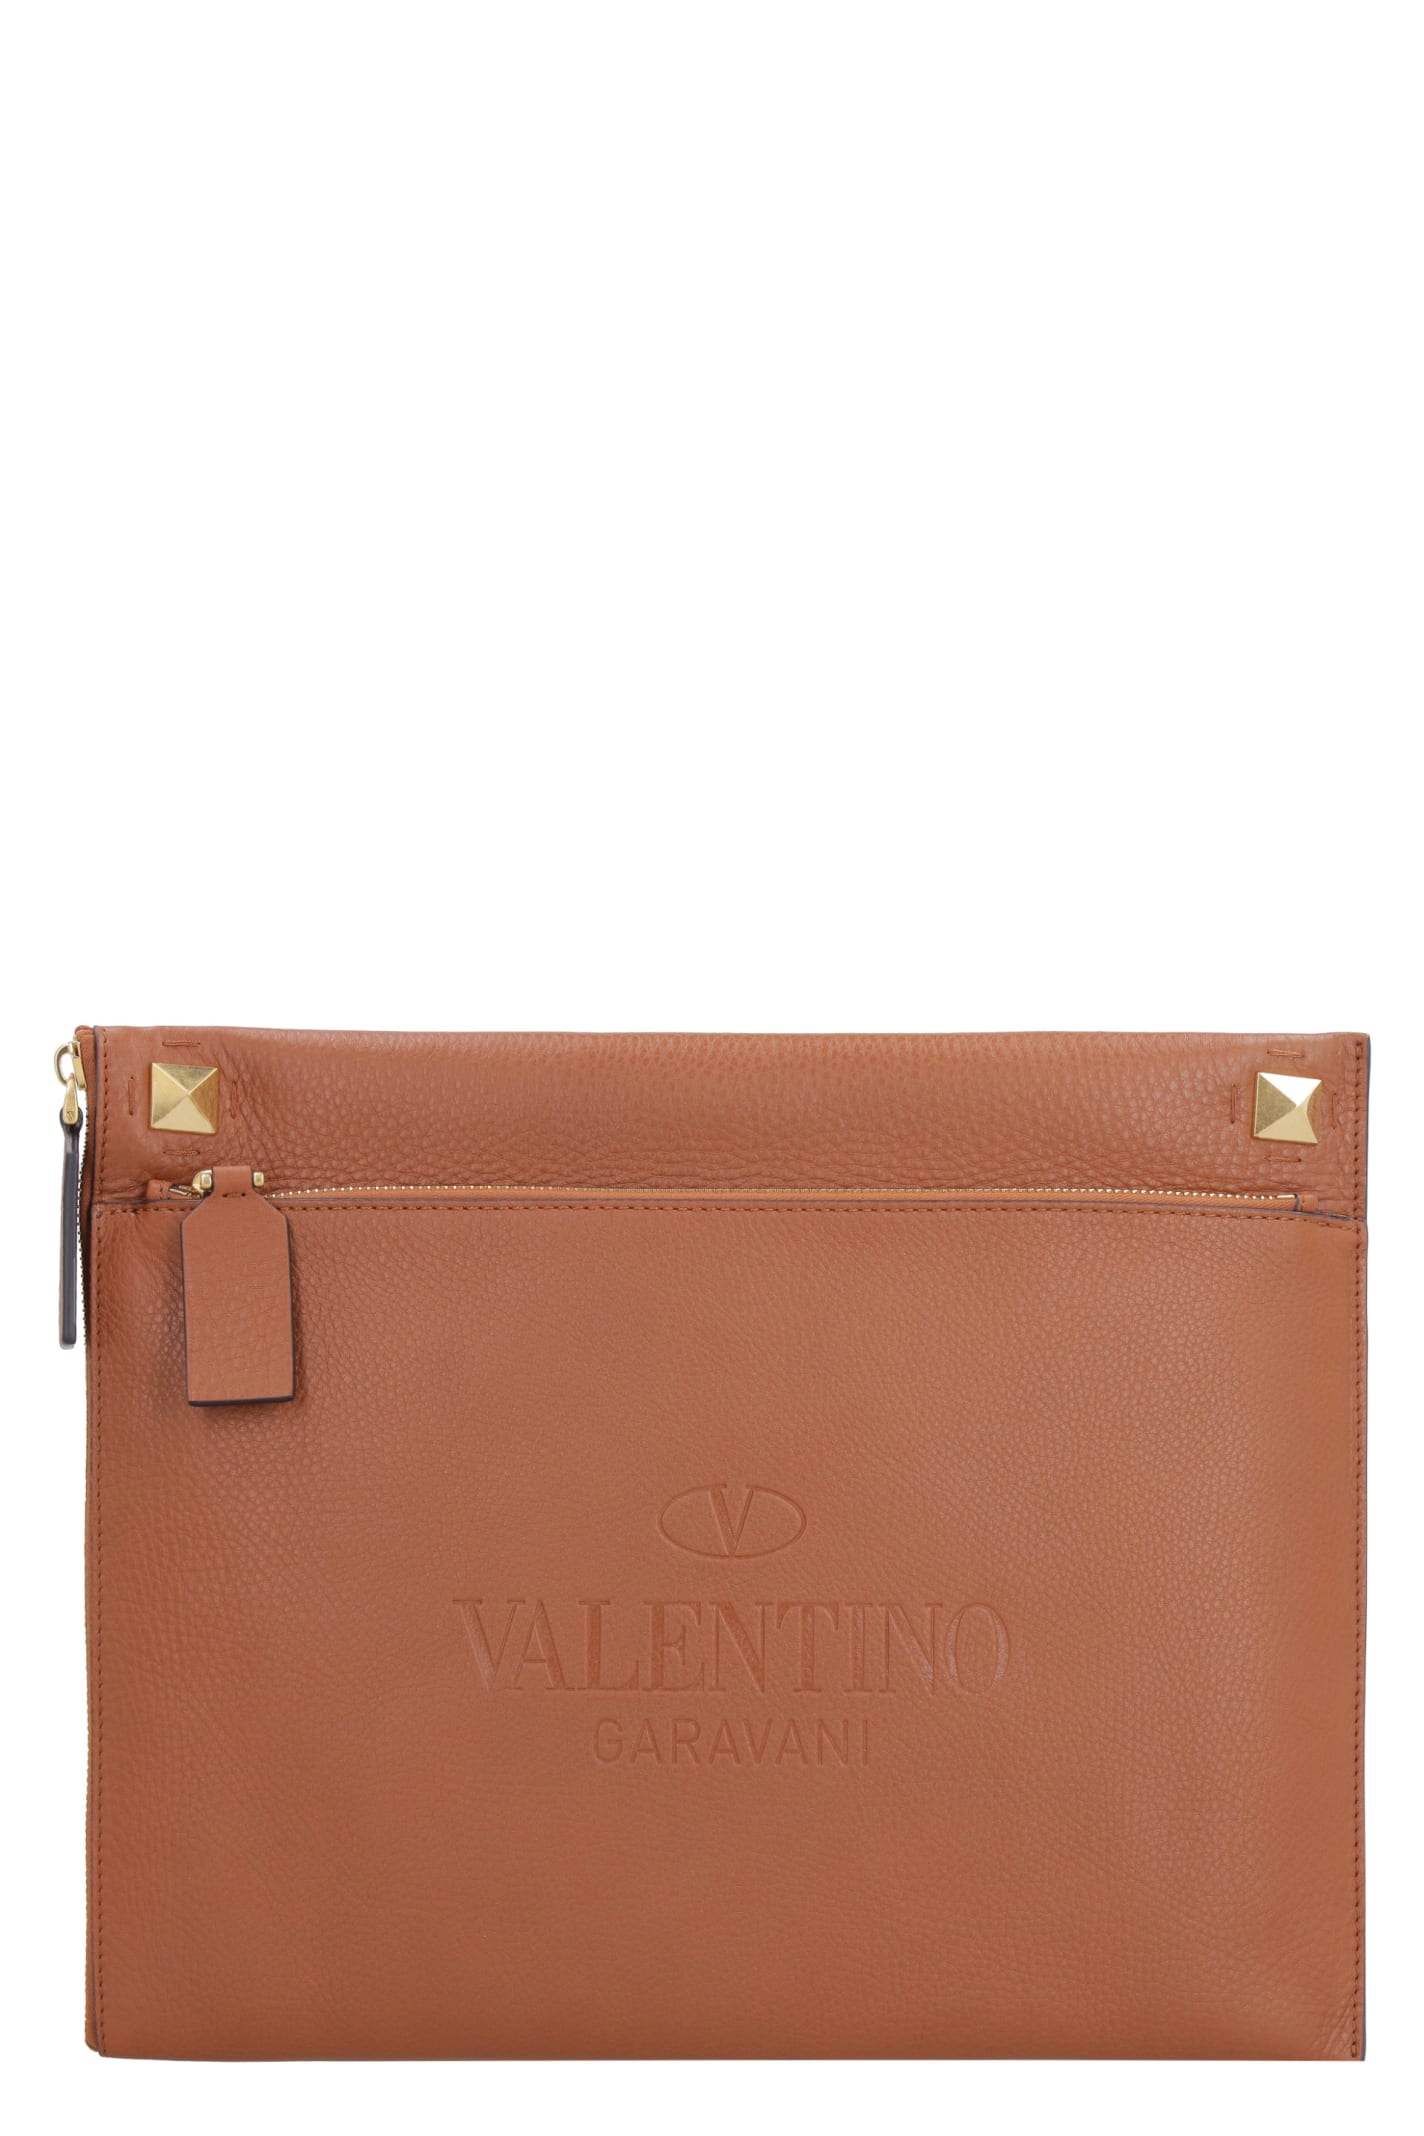 Valentino Garavani - Identity Leather Flat Pouch